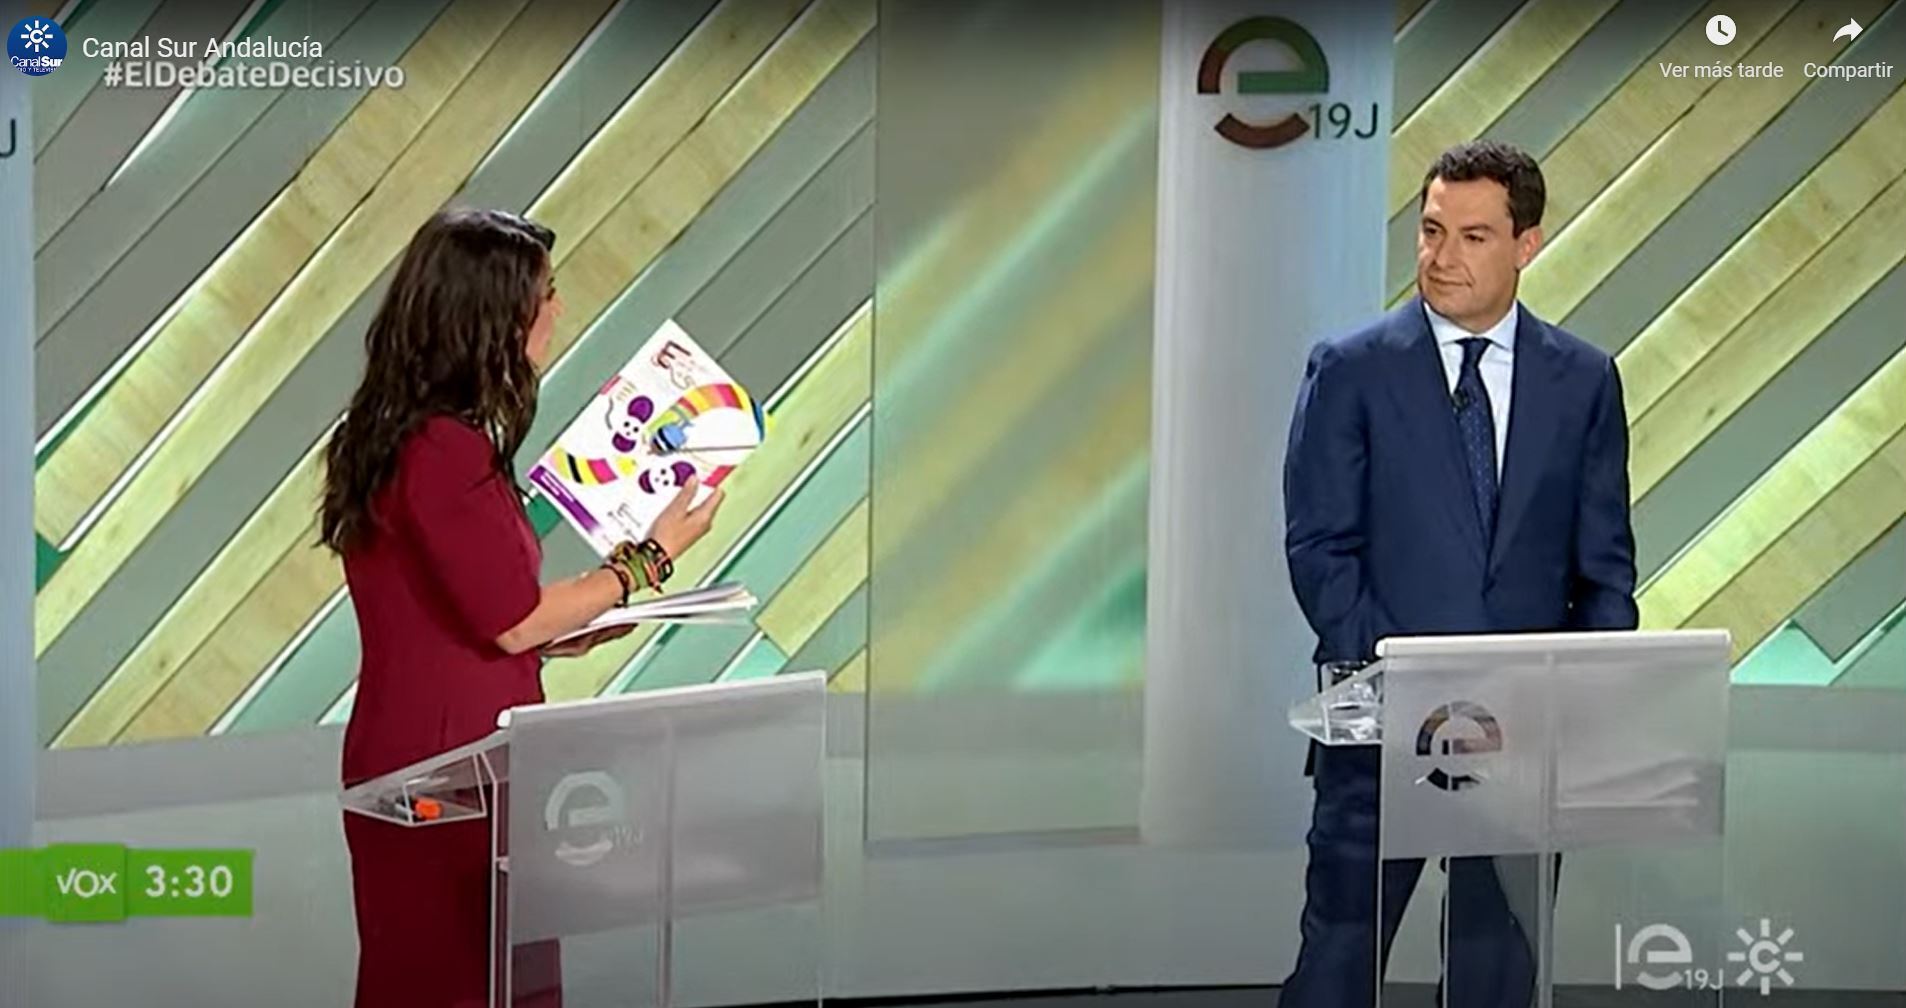 Macarena Olona shows Juanma Moreno the book according to which